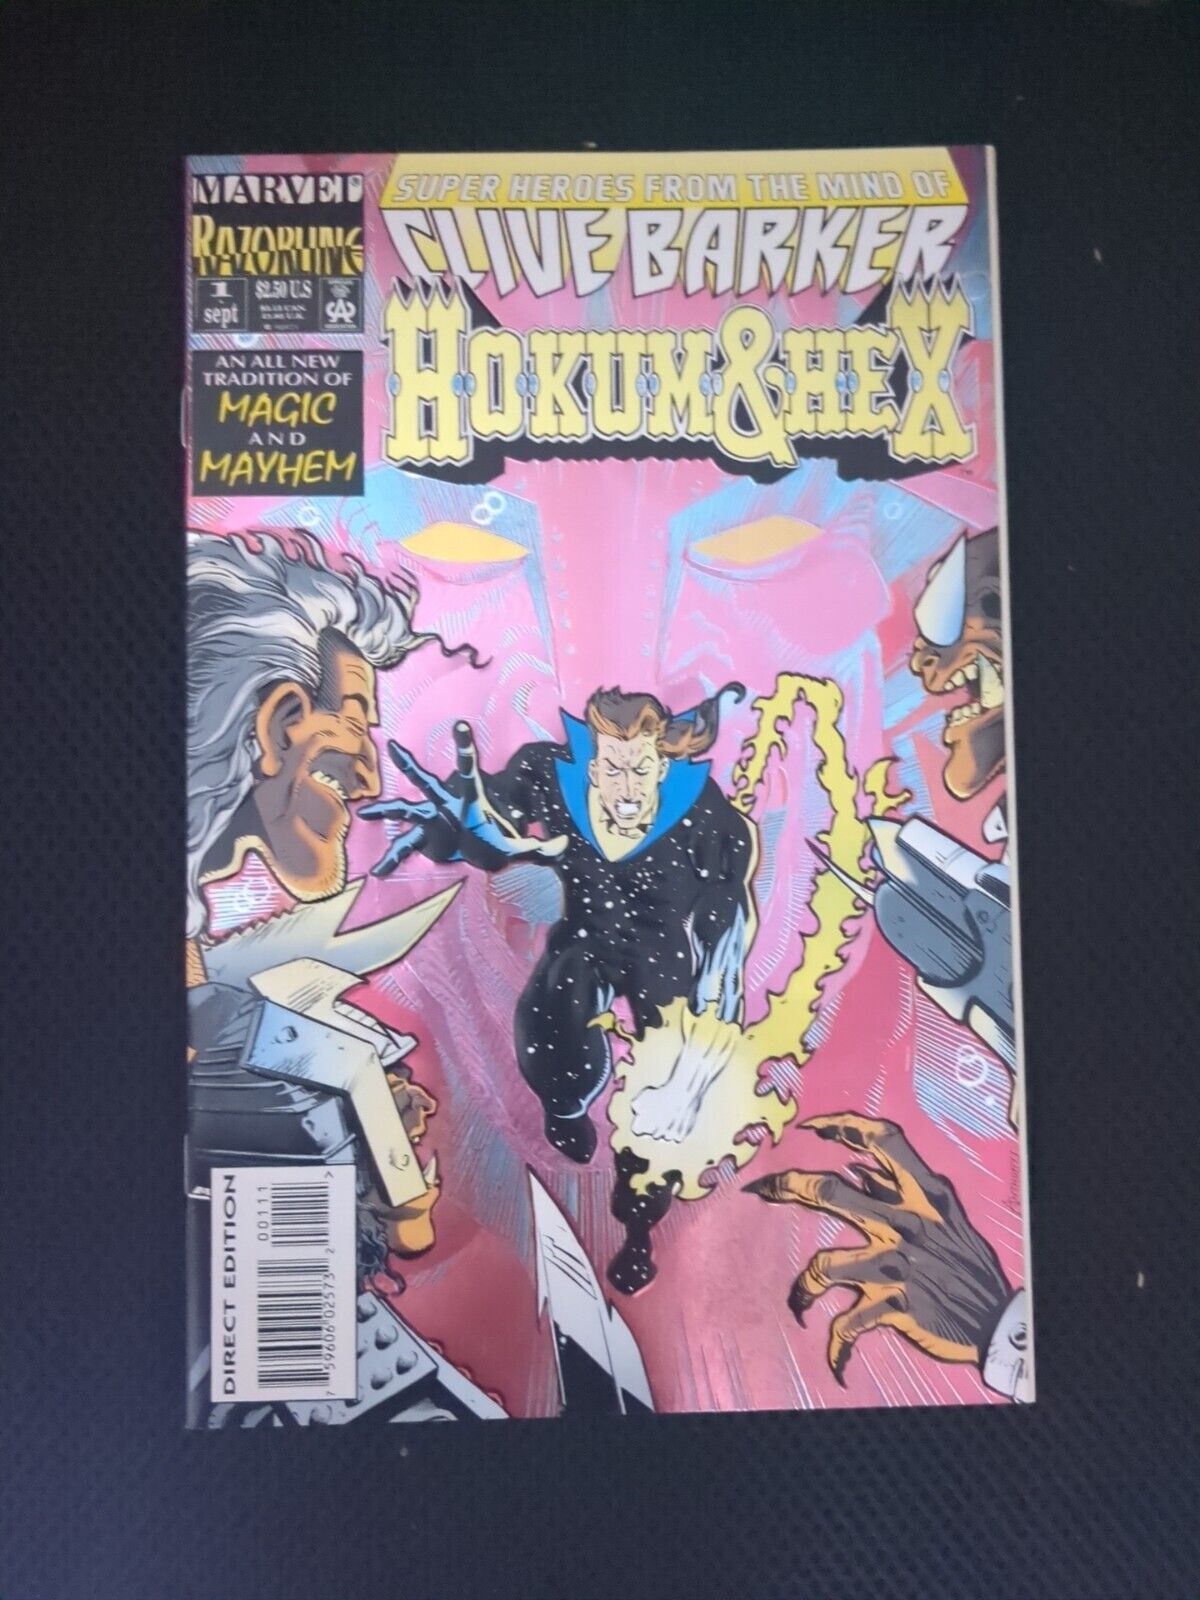 Clive Barker Hokum And Hex #1 Marvel Comics Razorline ( Embossed Cover )